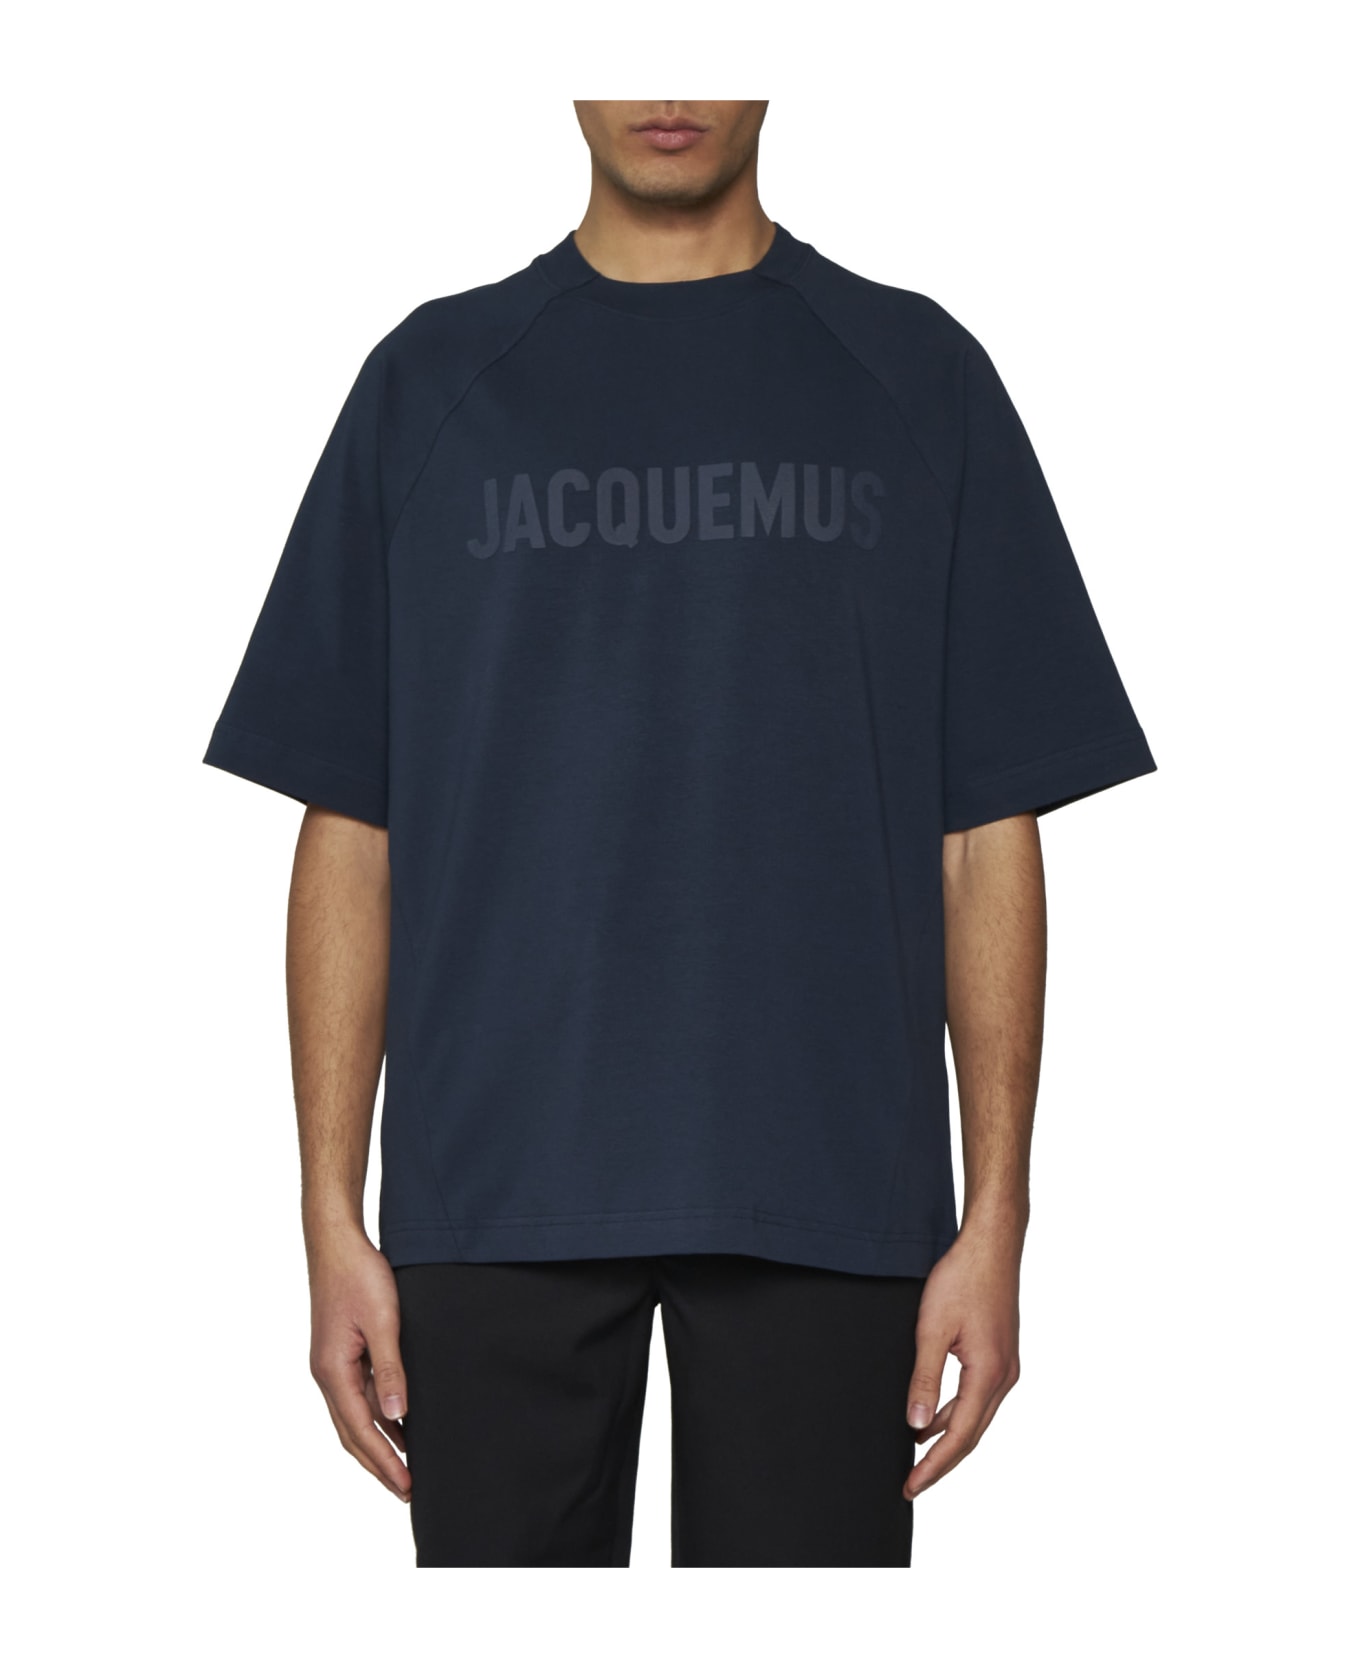 Jacquemus Typo Crewneck T-shirt - Dark navy